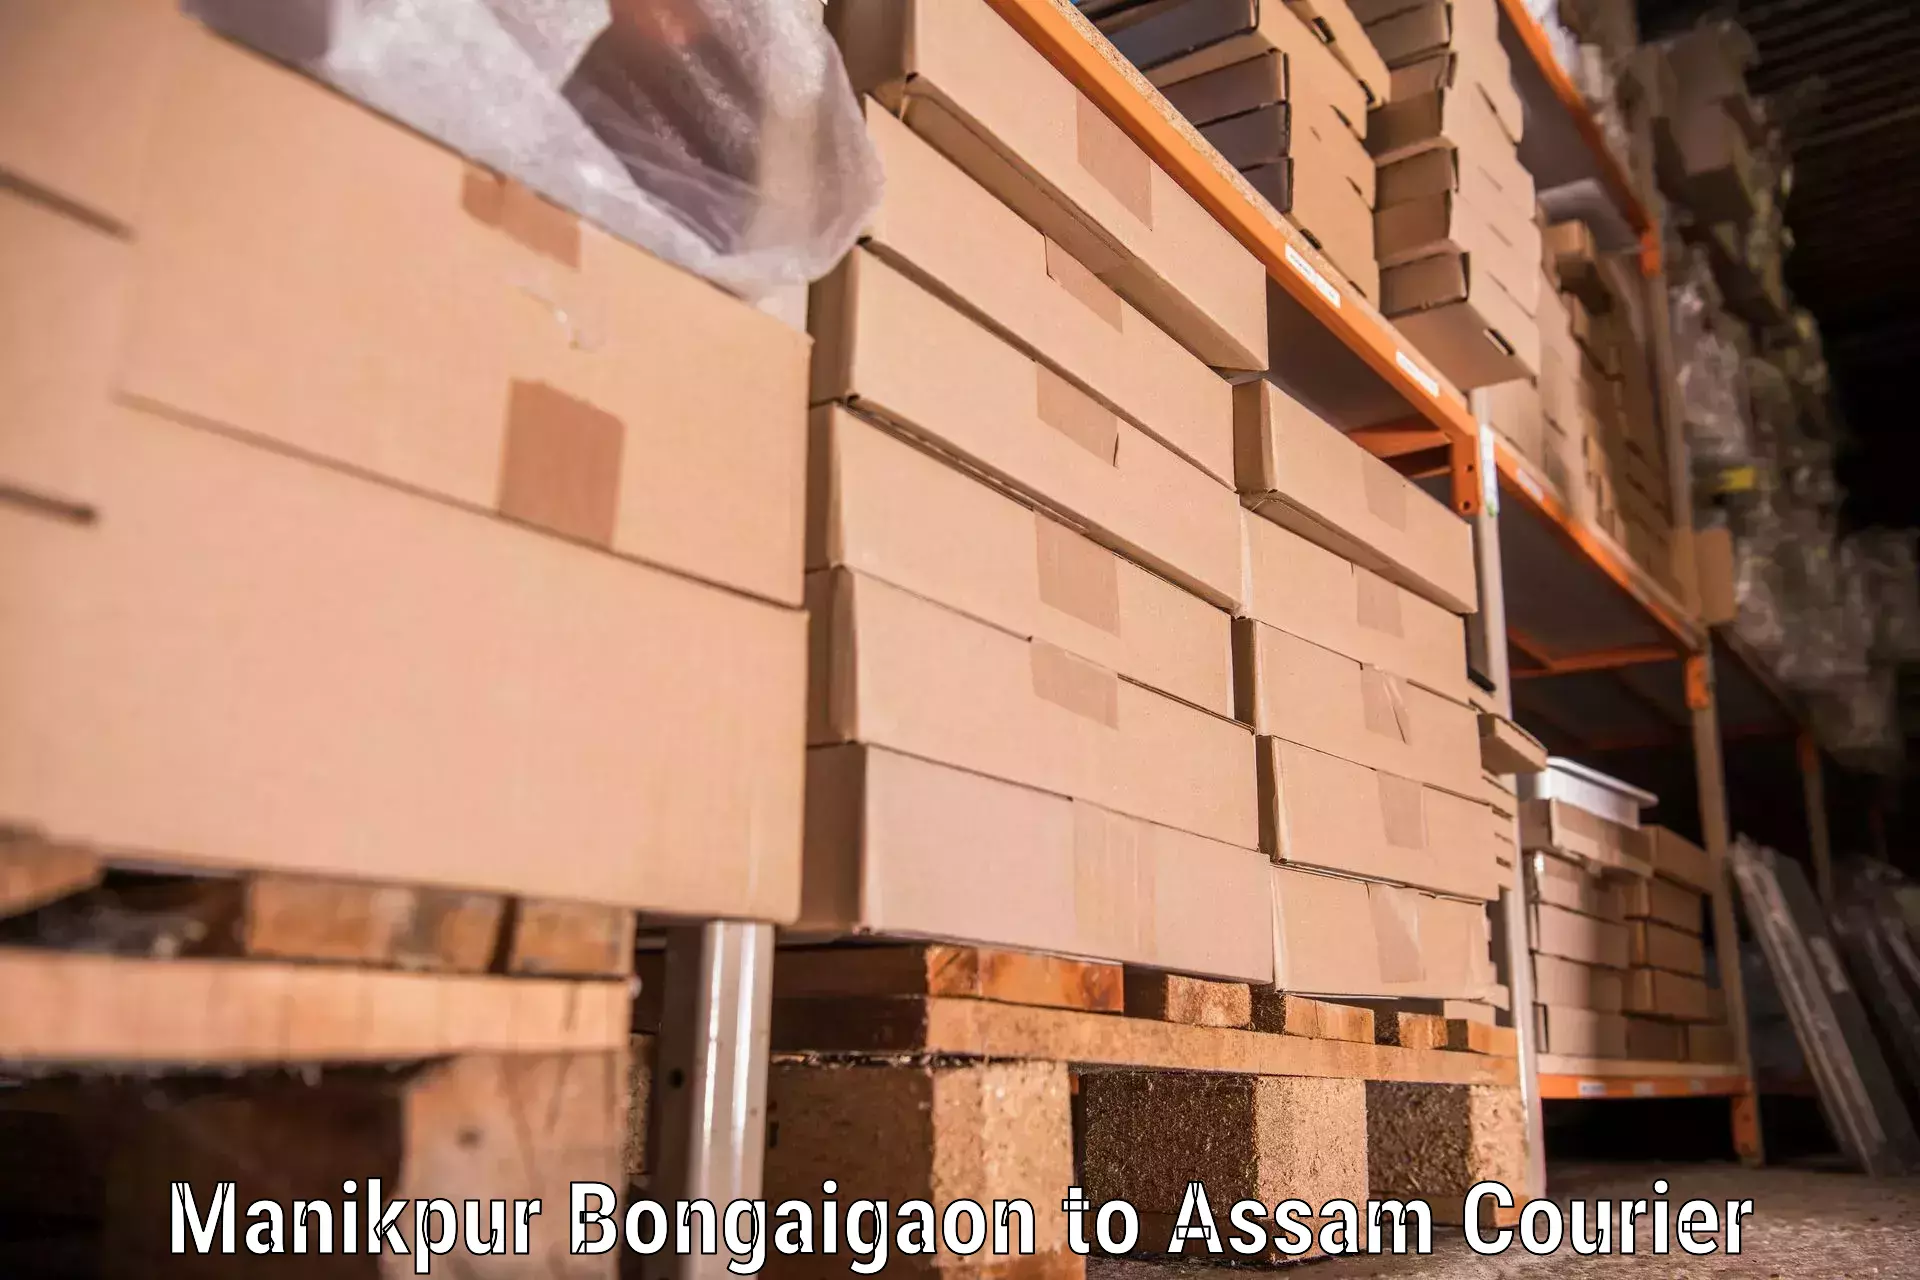 Budget-friendly movers Manikpur Bongaigaon to Behali